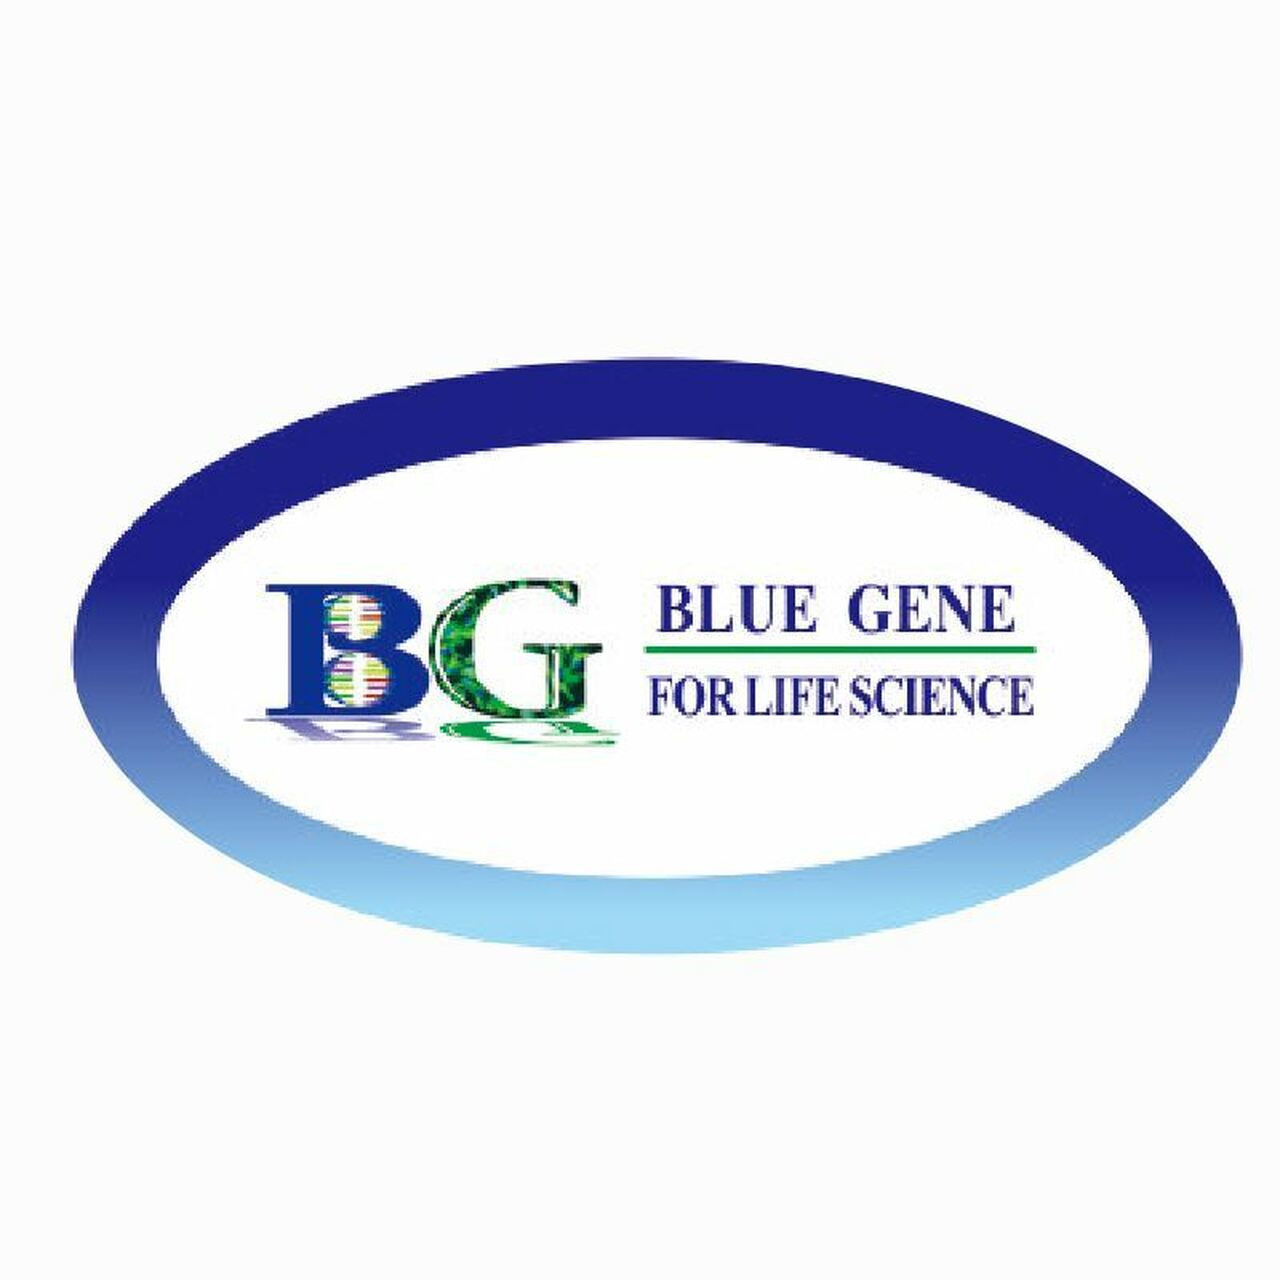 bluegene-pregnancy-associated-glycoproteins-elisa-kit